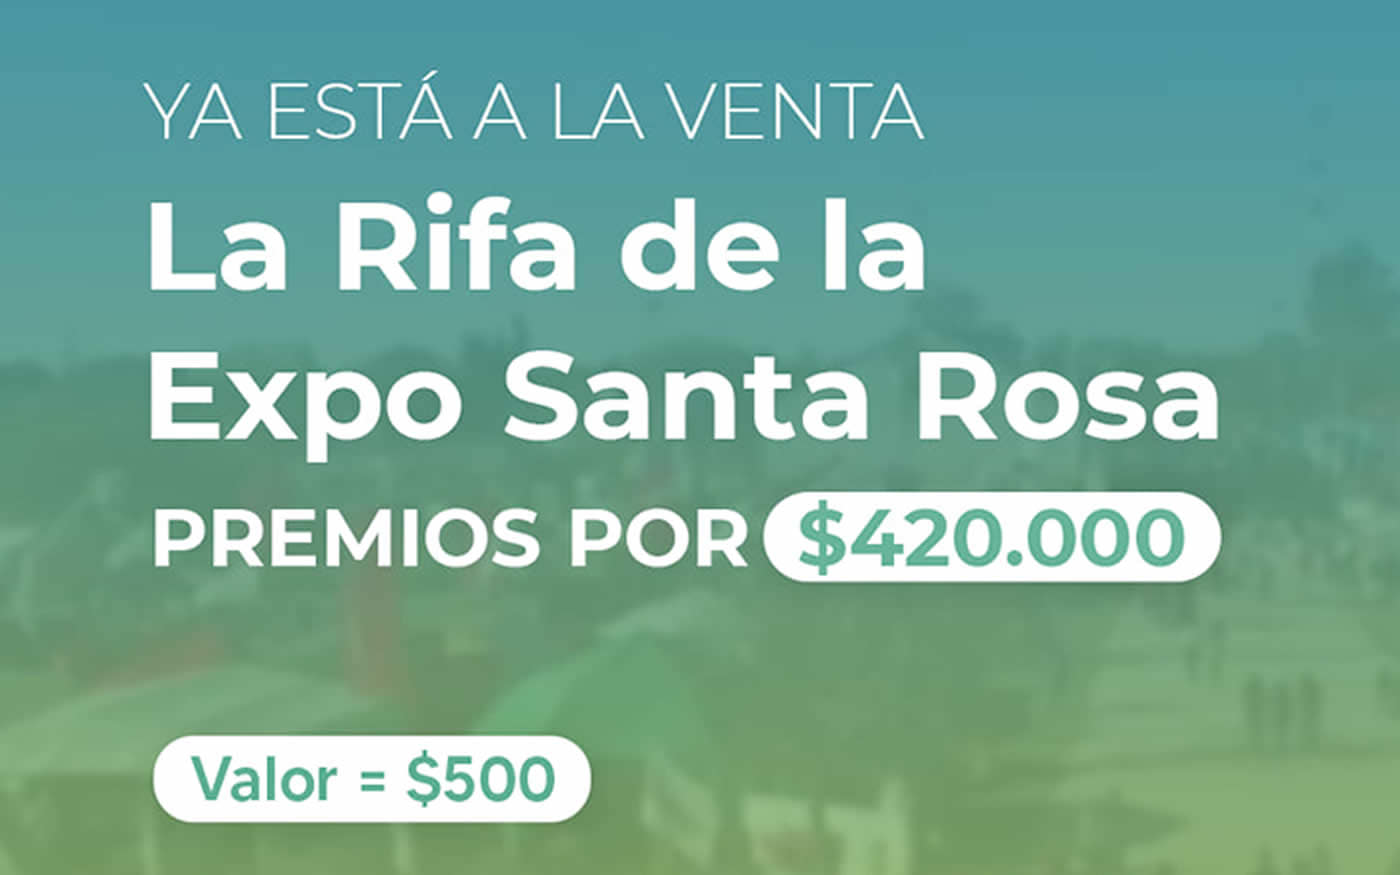 La Rifa de la Expo Santa Rosa ya se encuentra a la venta